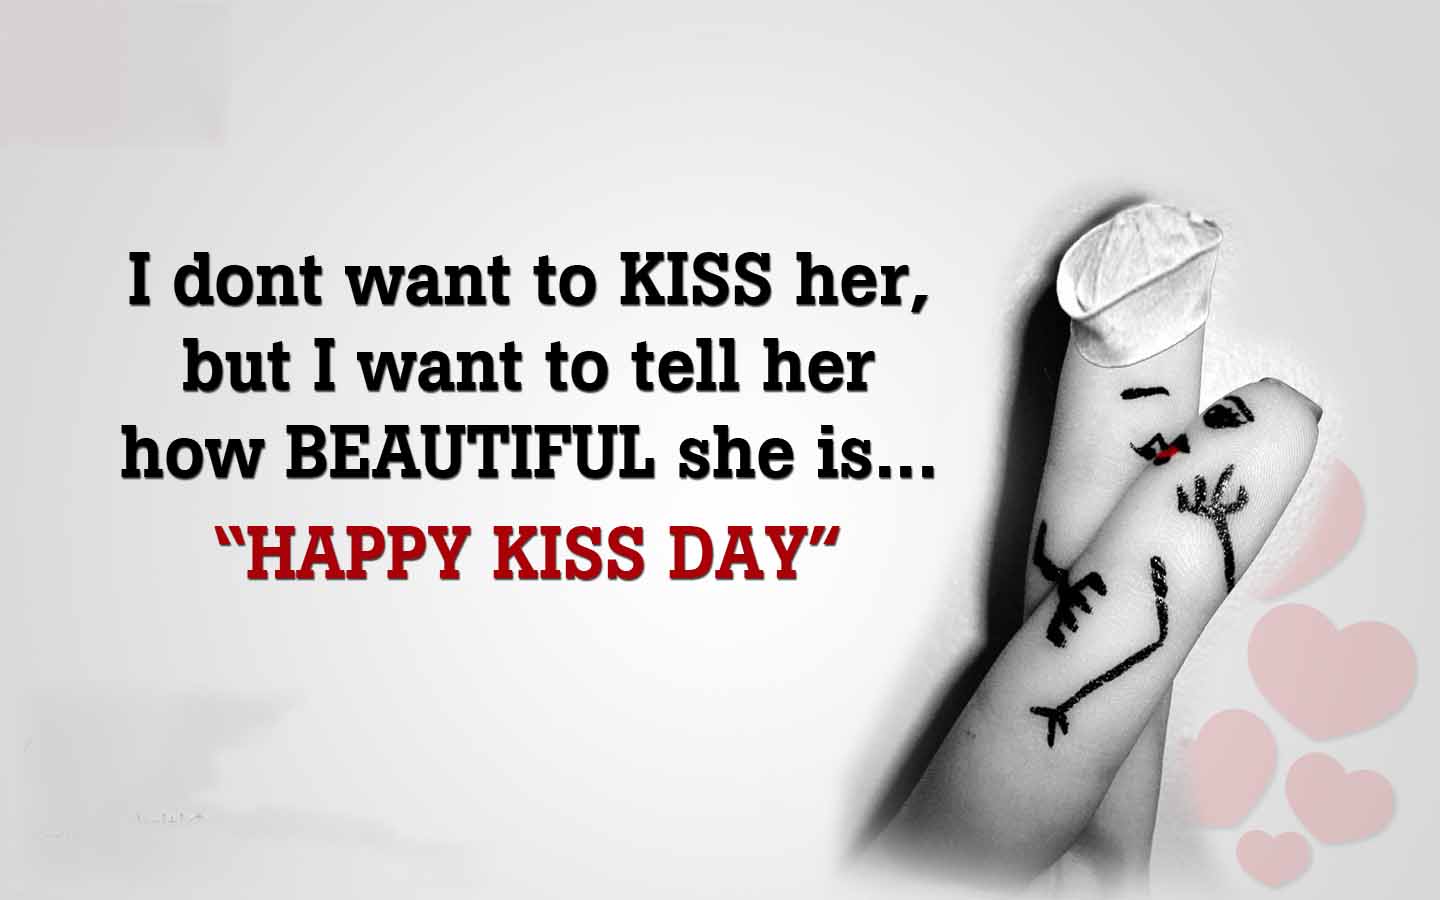 Download Kiss Wallpaper, Kiss Day E-Greetings, Friendship Ecards, Happy Kiss Day, Kiss Day, Kiss Day 2015, Kiss Day wishes sms, Kiss Day – 13 February, Love Kiss Ecards, Send Kiss Day